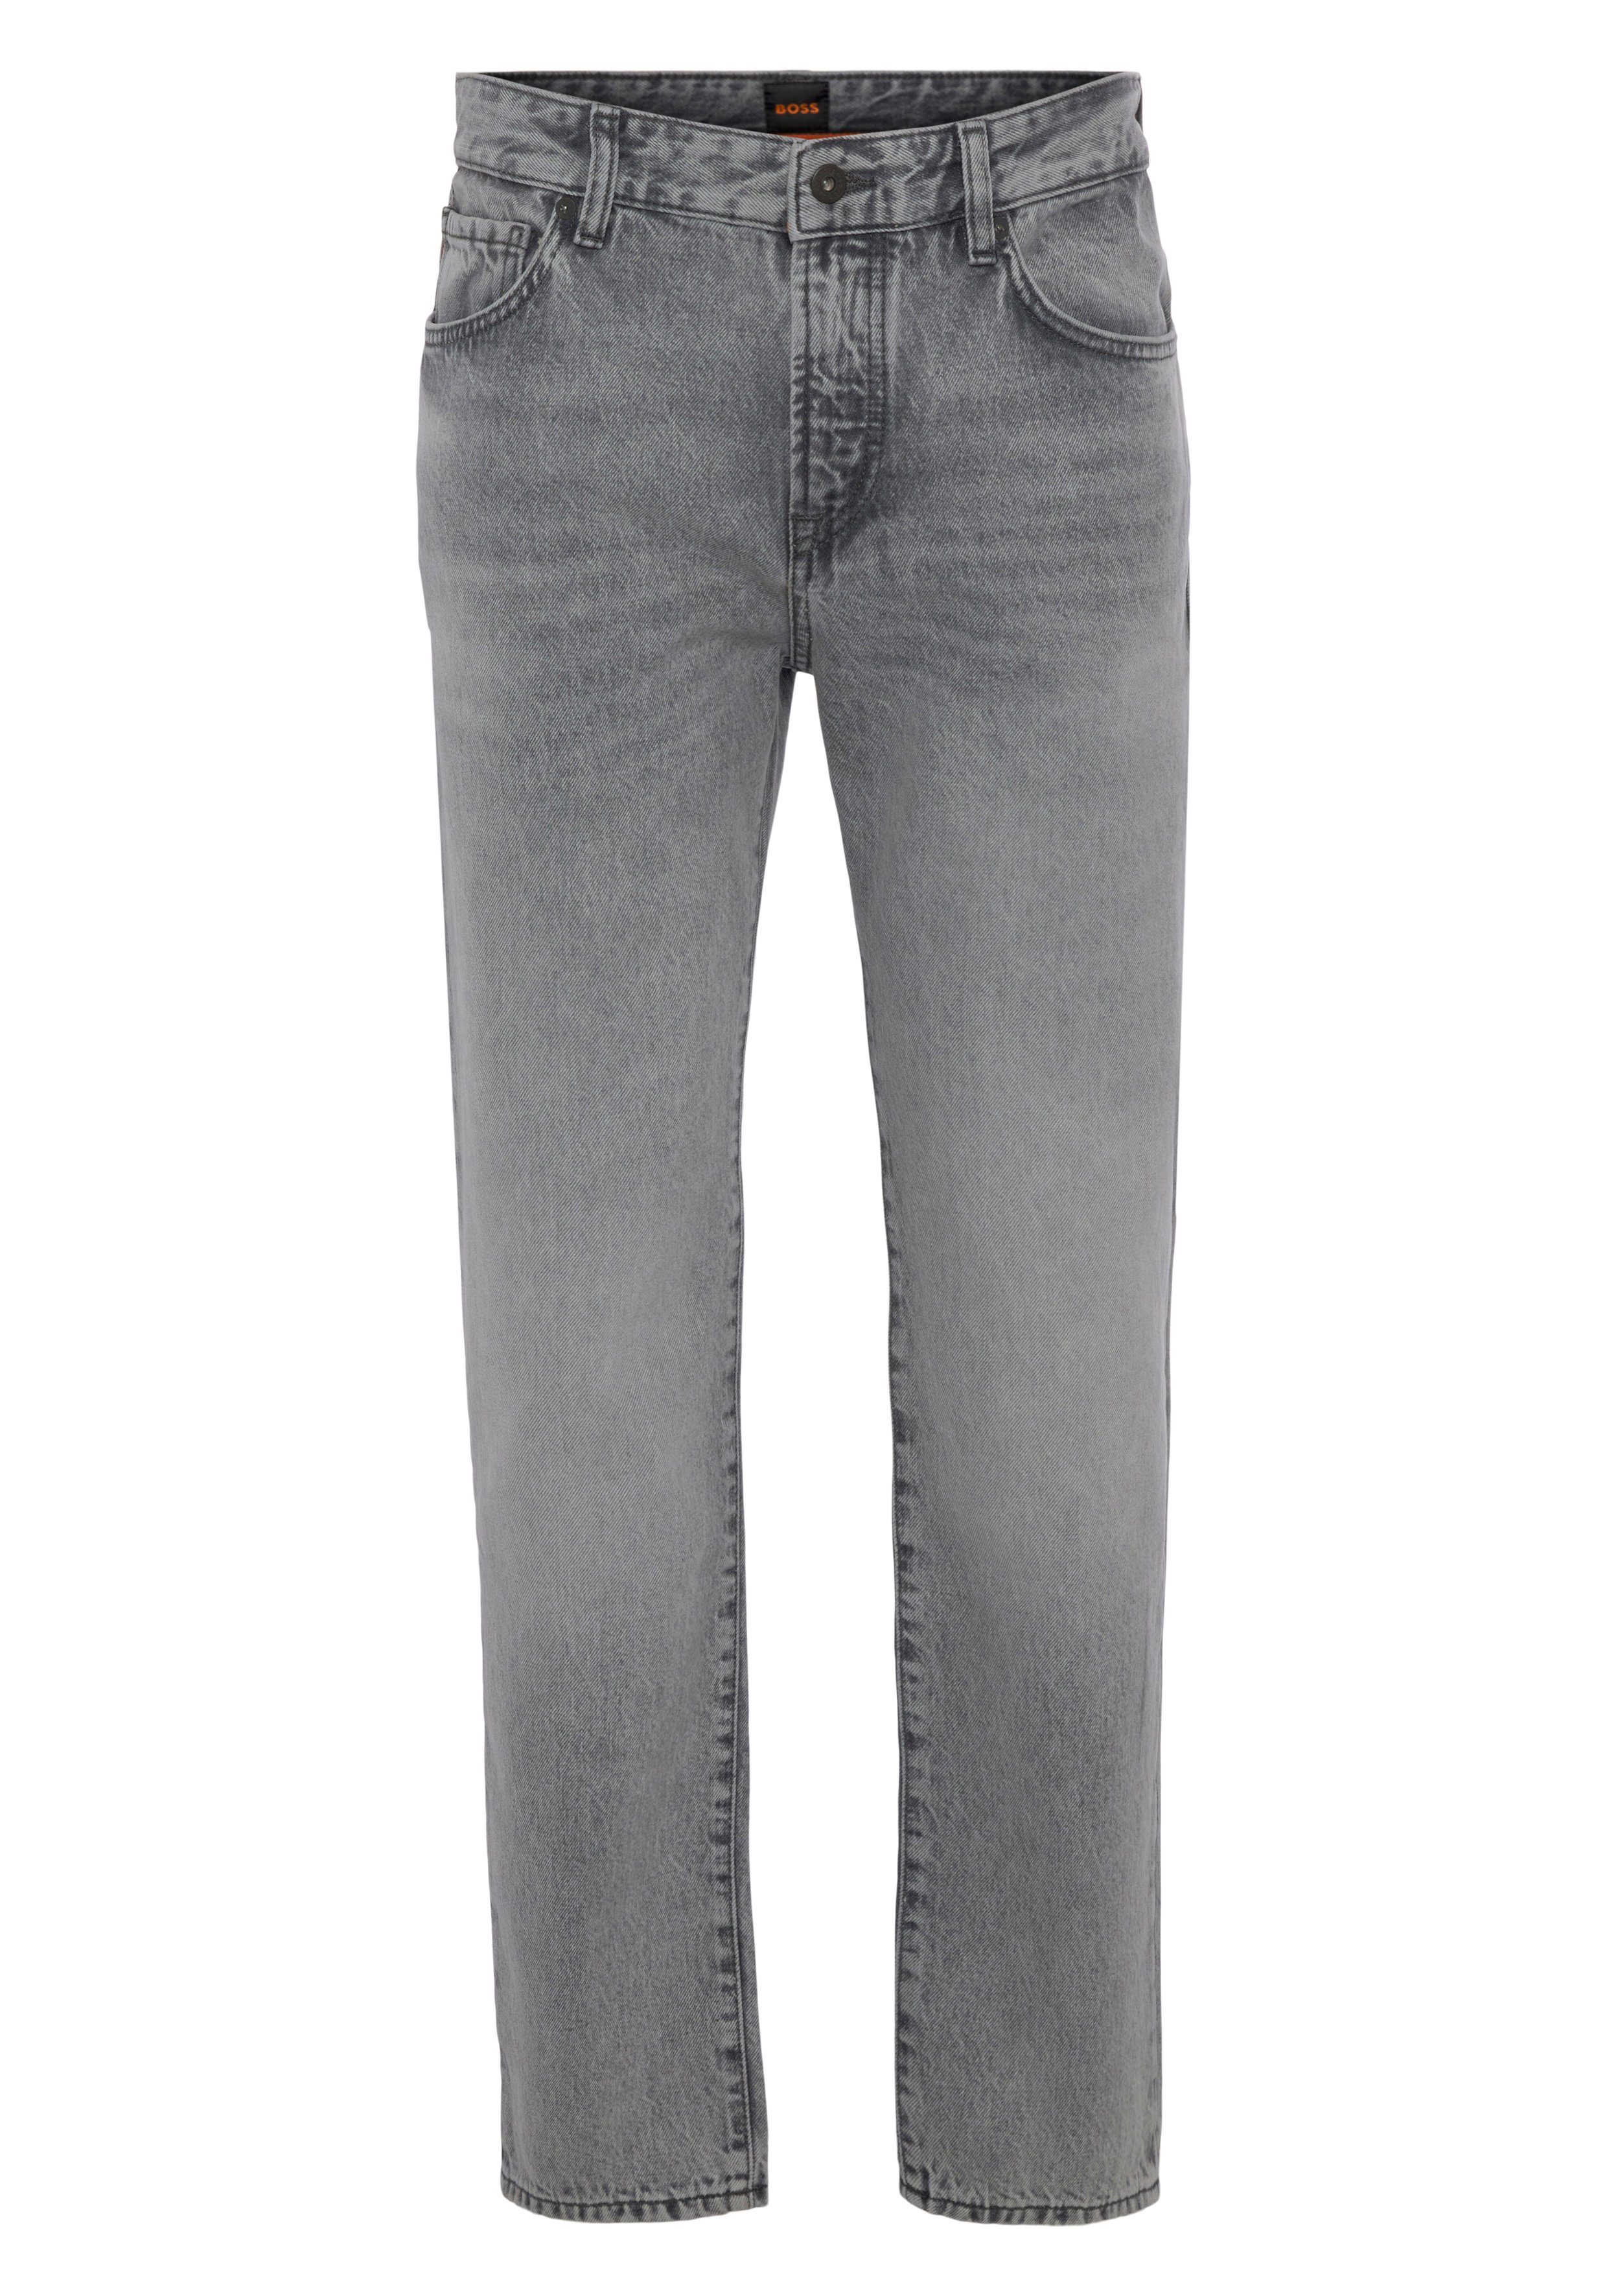 BOSS ORANGE pastellgrau mit Leder-Badge Gerade Jeans